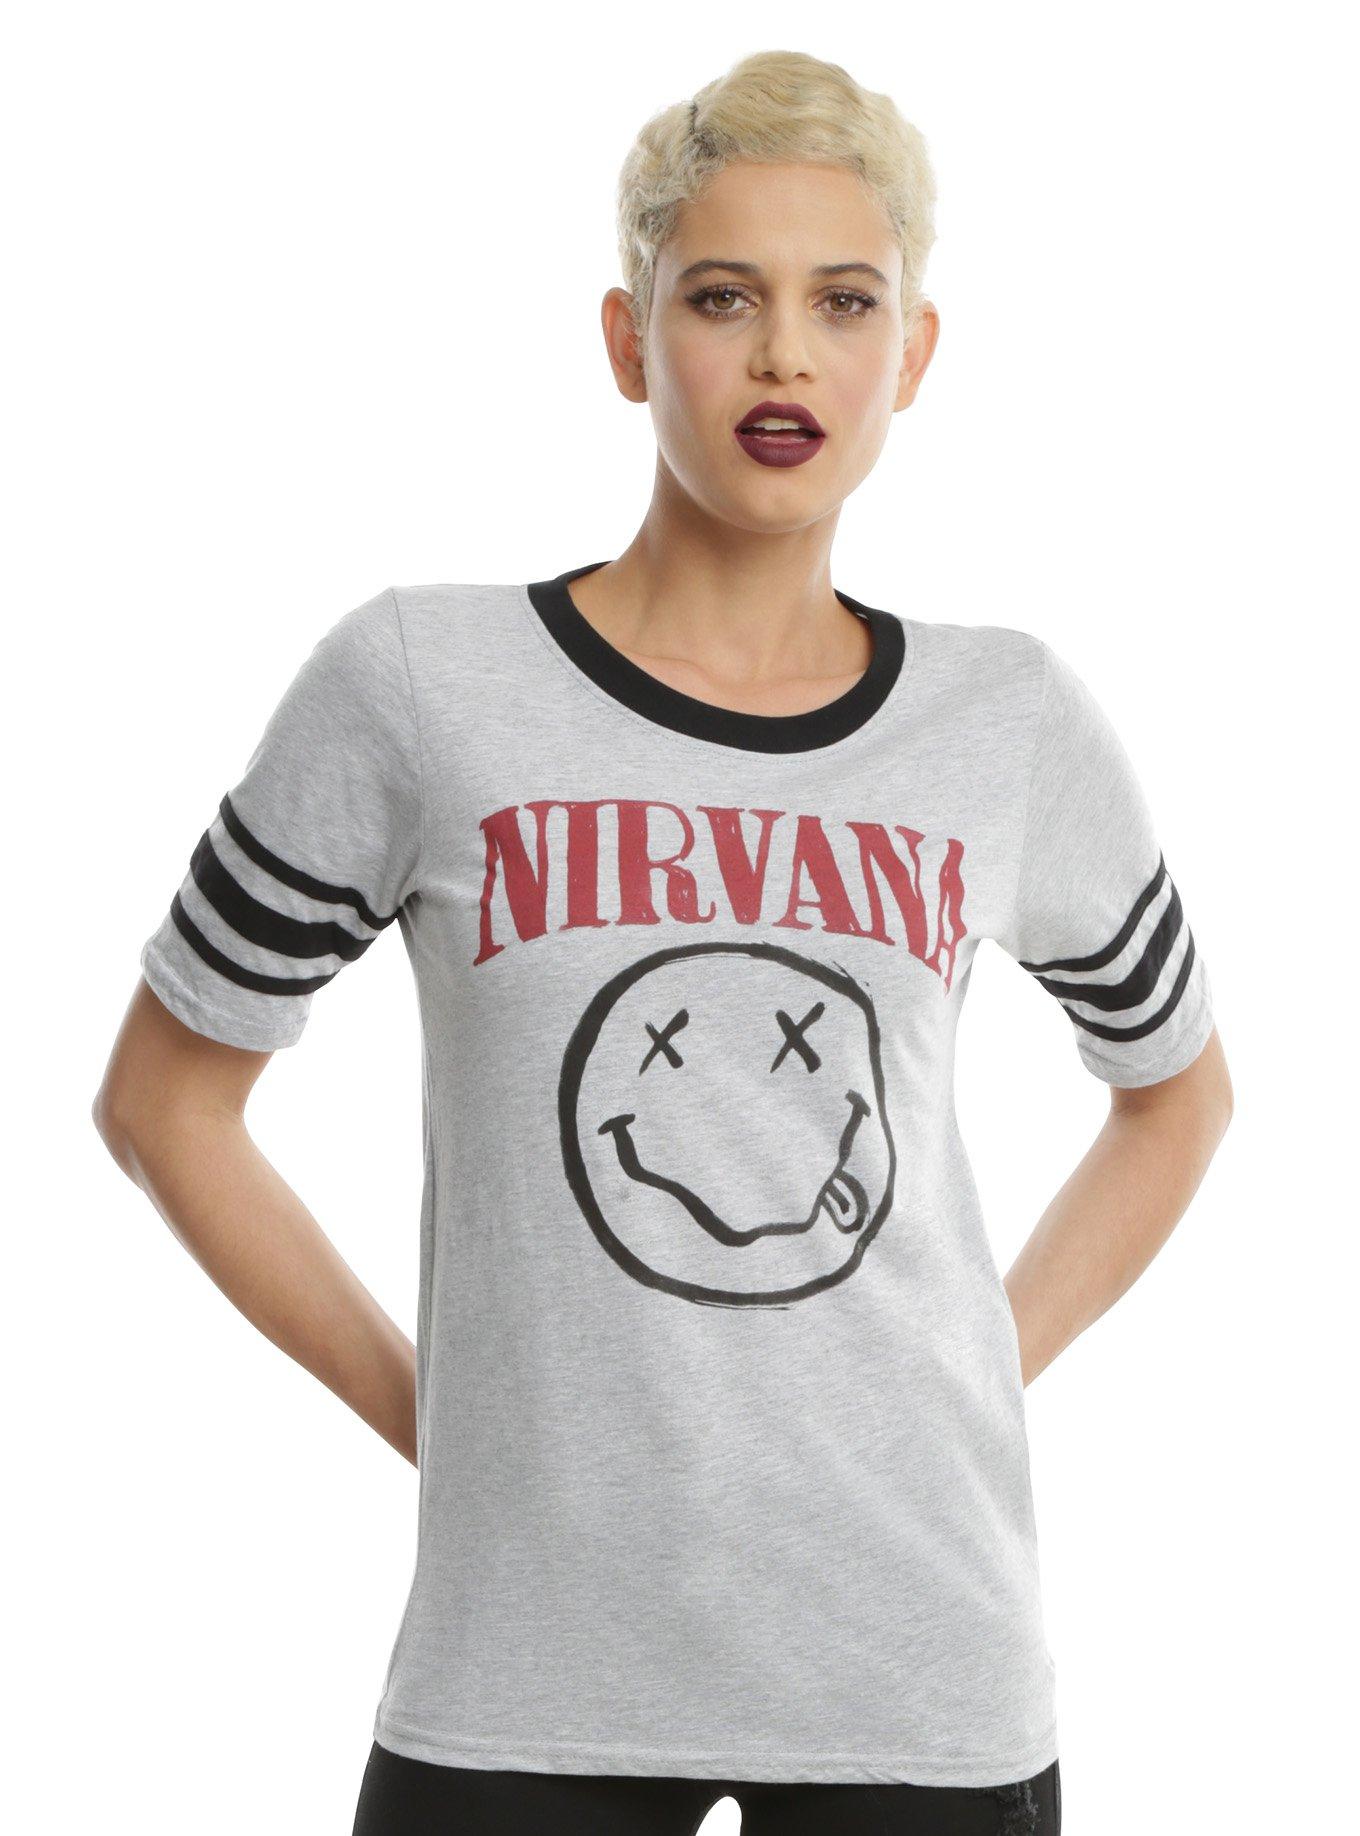 Nirvana Smiley Girls Athletic T-Shirt, HEATHER GREY, hi-res